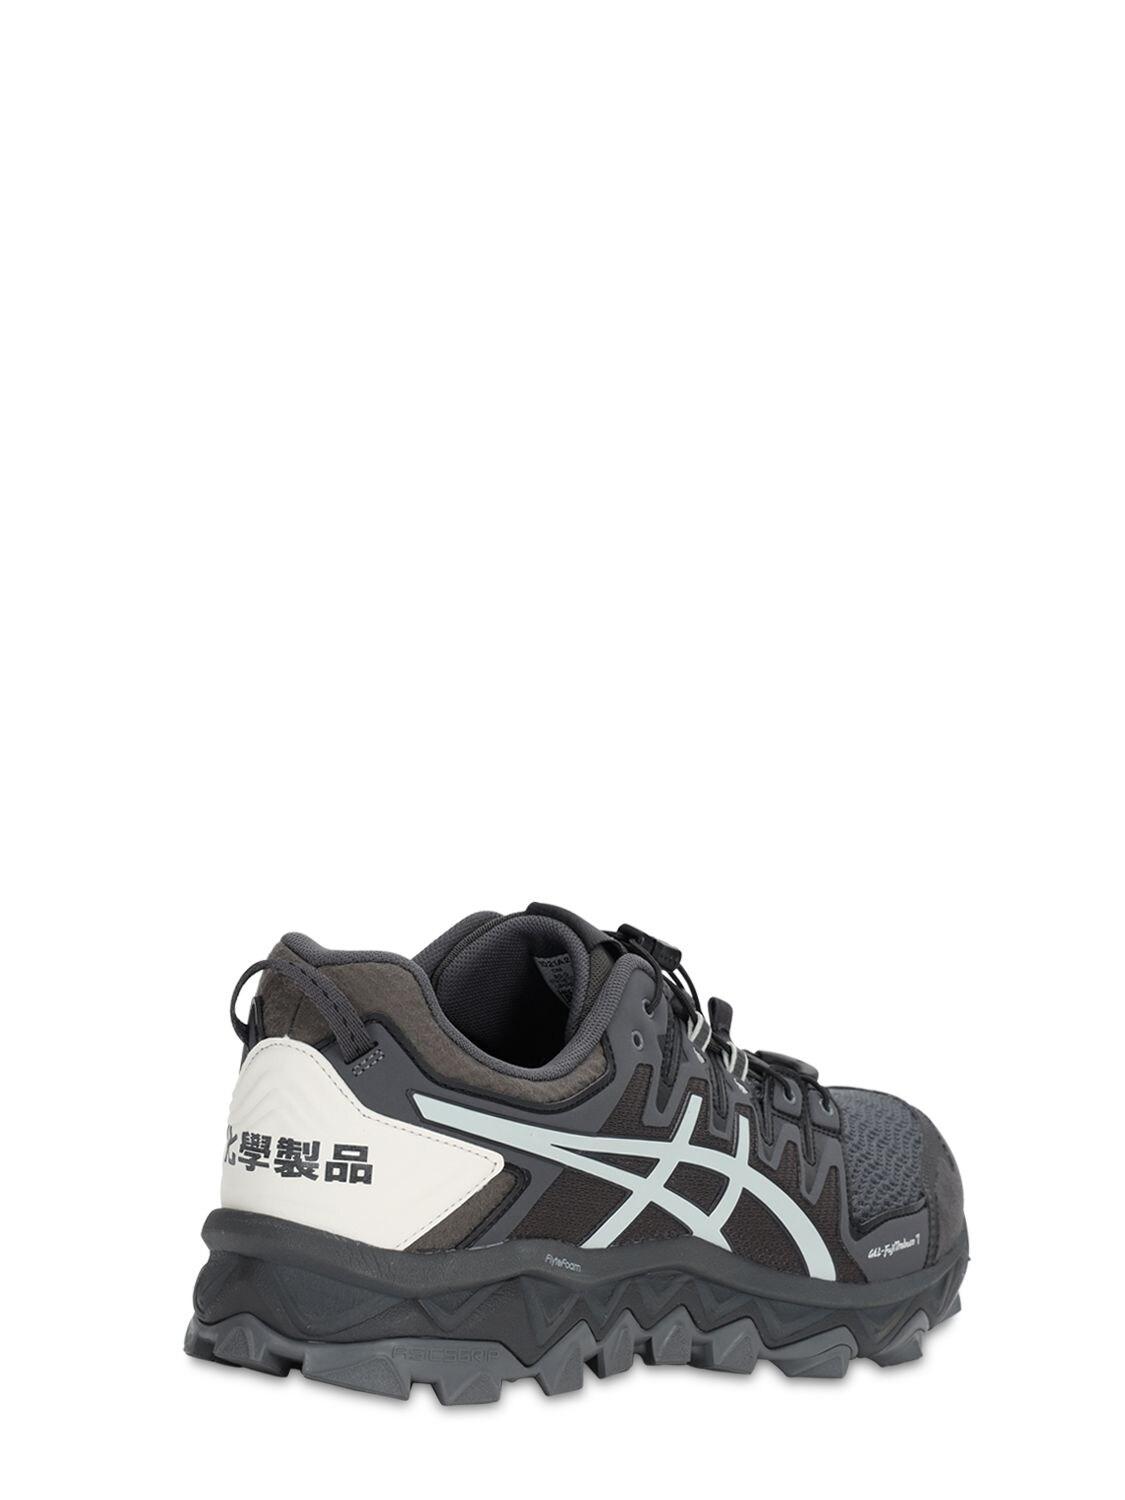 Asics Gel-fujitrabuco 7 X C2h4 Sneakers for Men | Lyst Australia